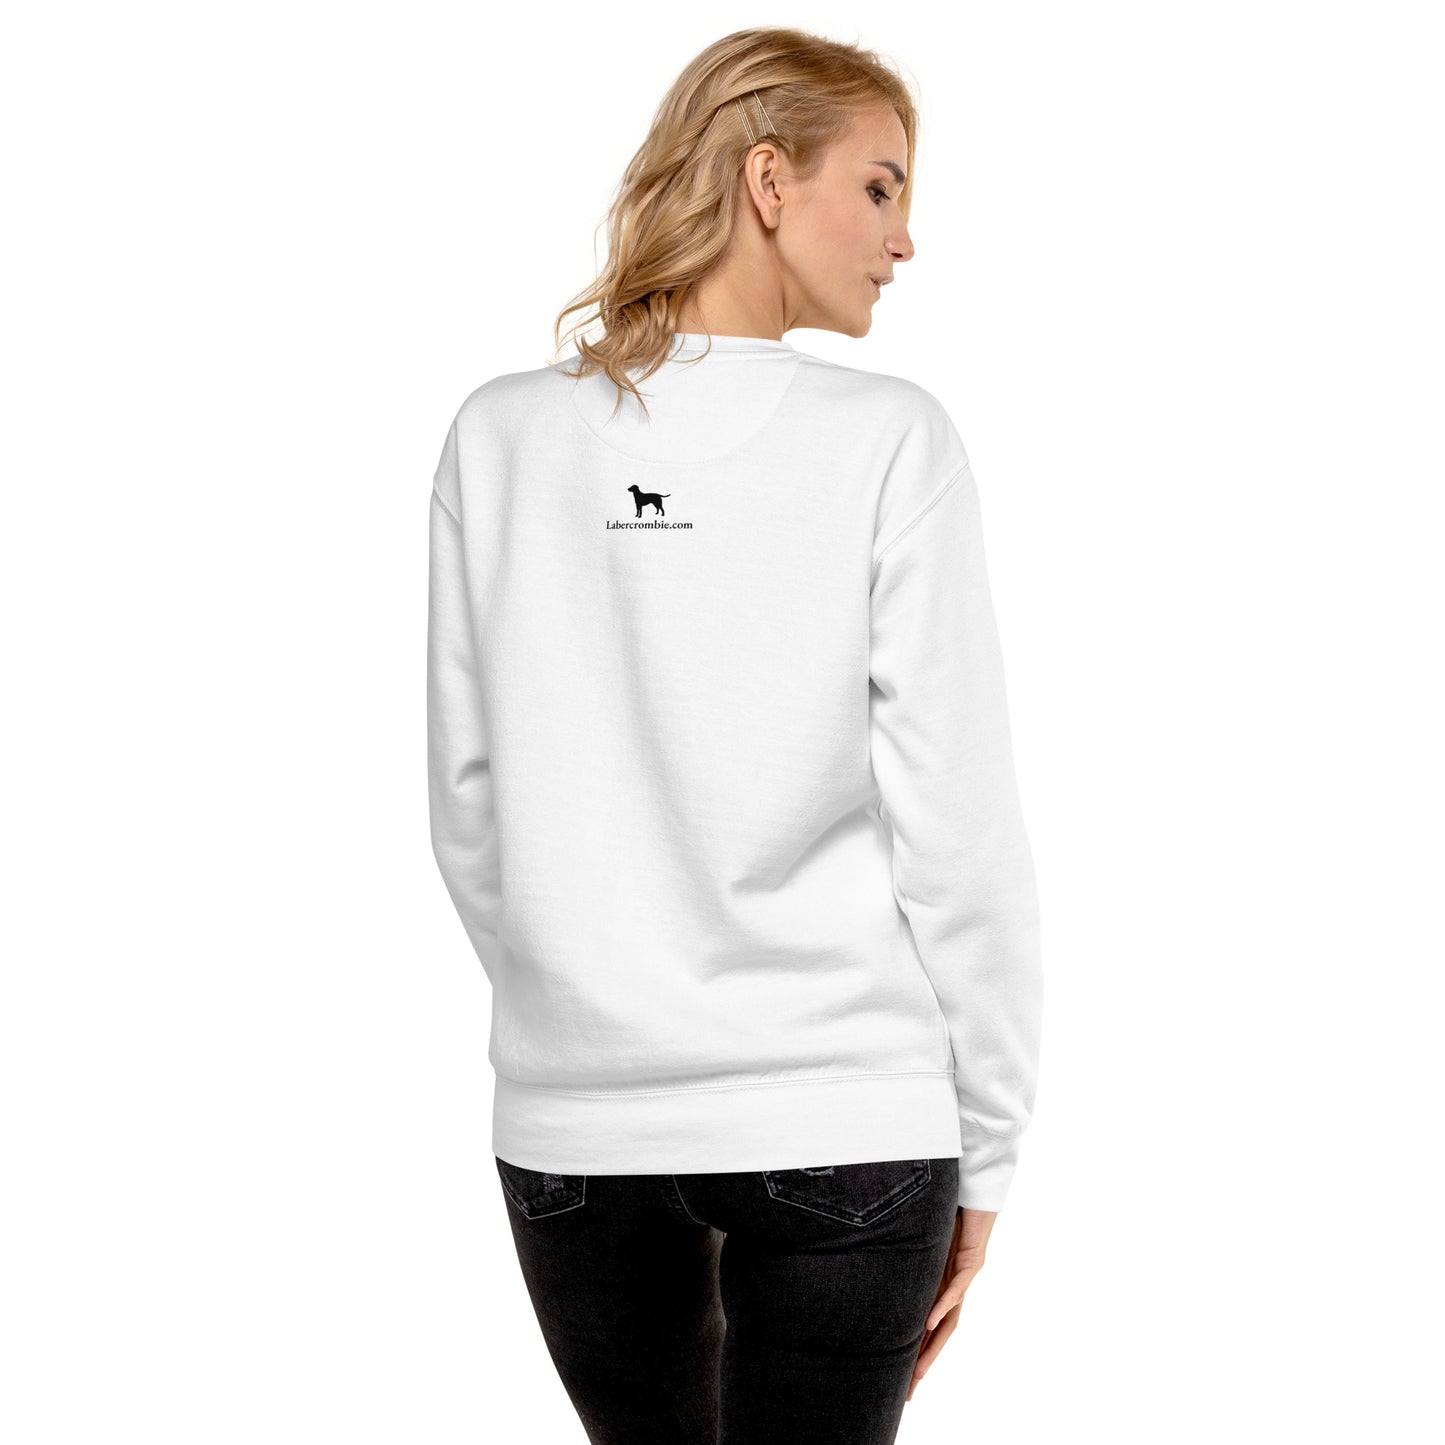 Hola Unisex Premium Sweatshirt